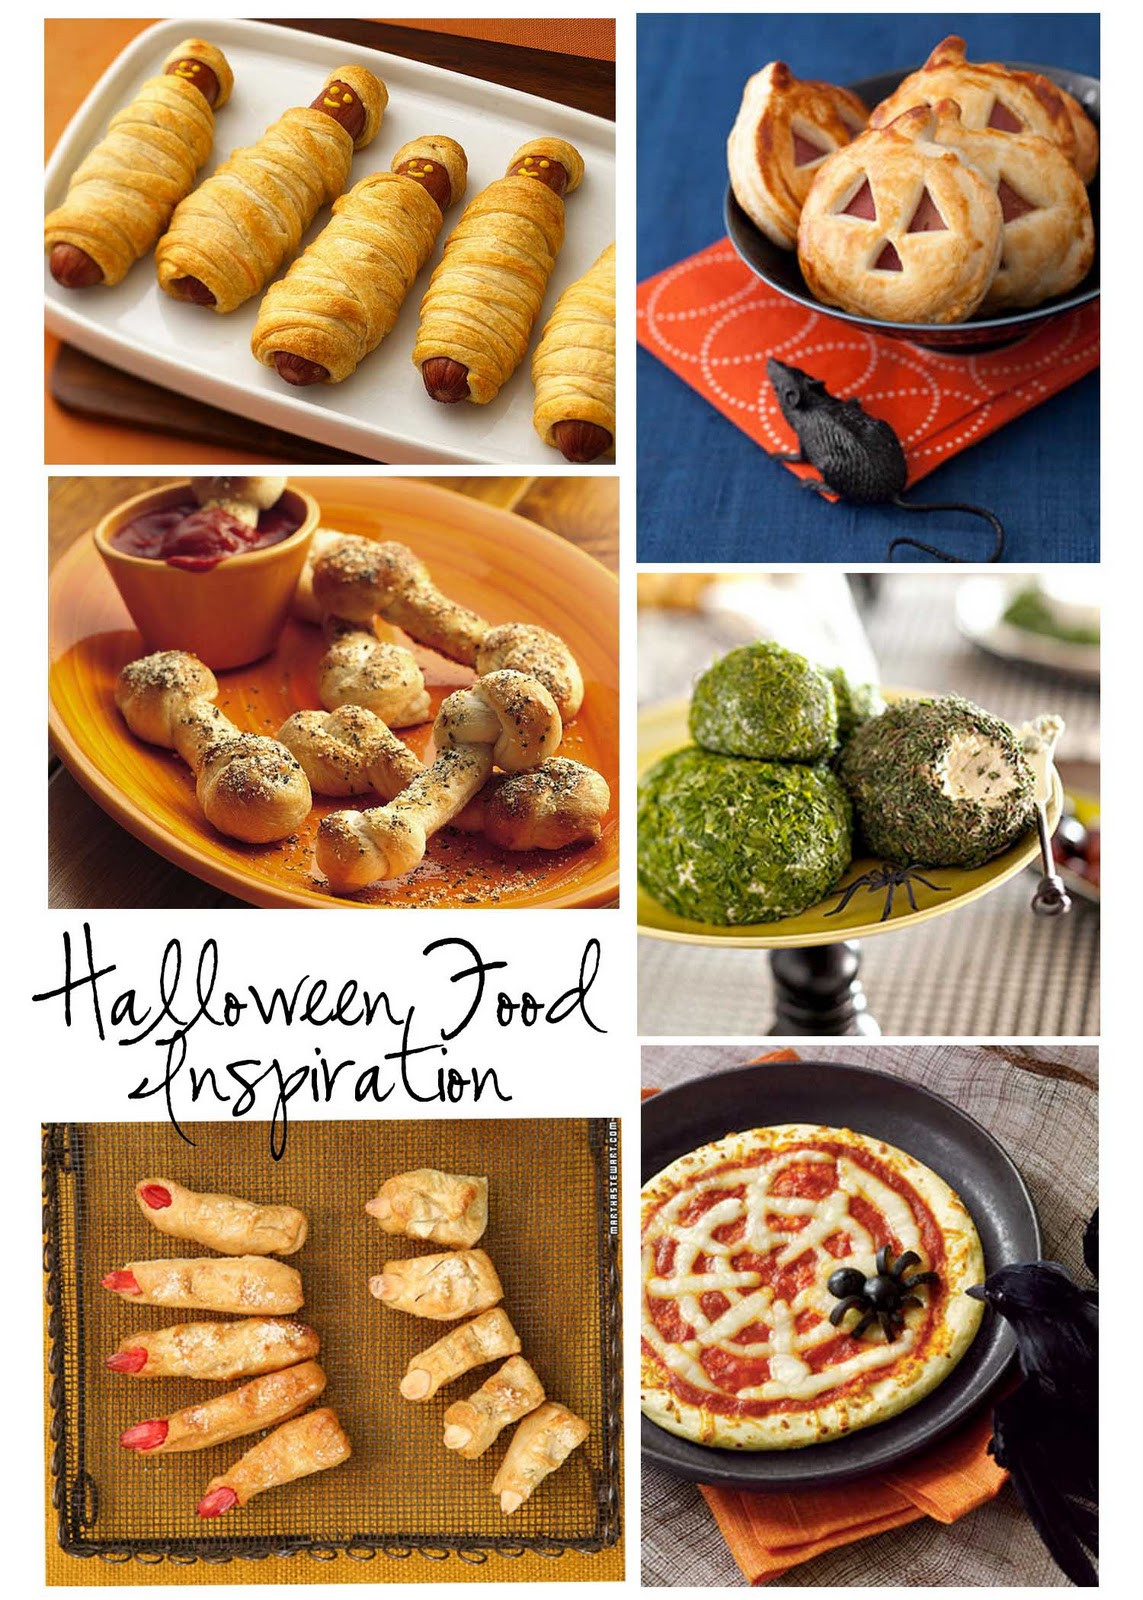 Halloween Kids Party Food Ideas
 Room to Inspire Spooky Food Ideas